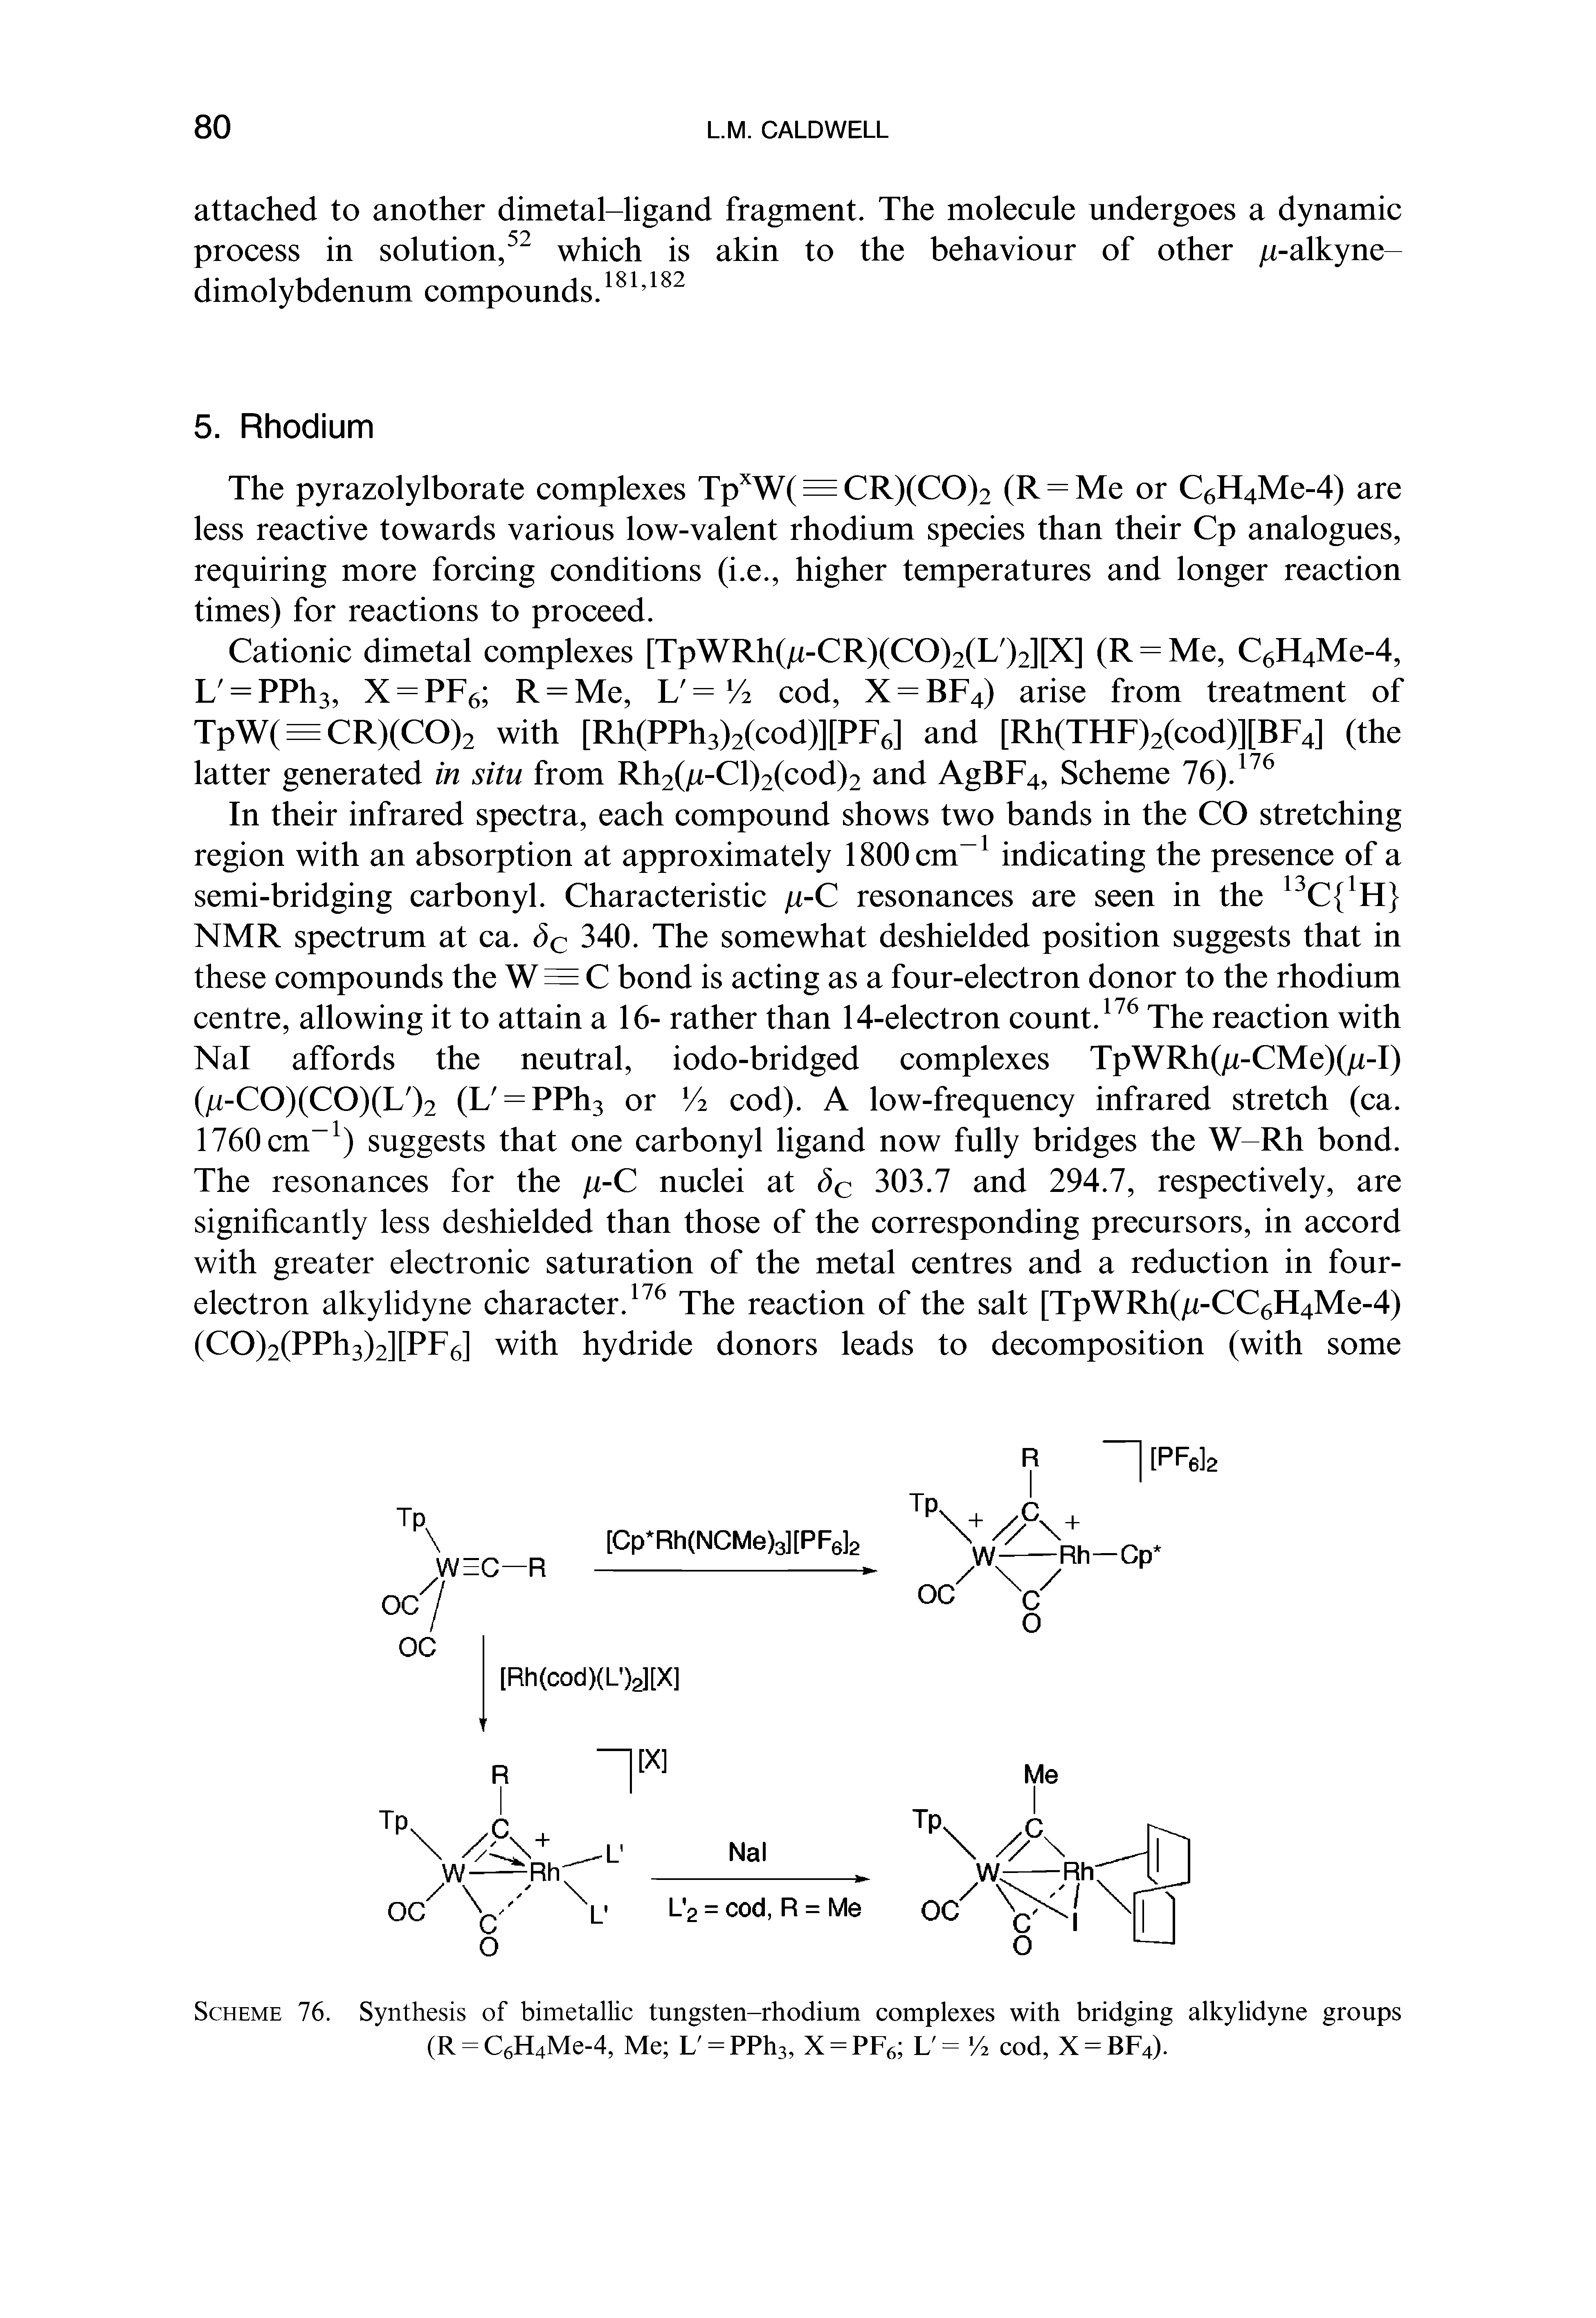 Scheme 76. Synthesis of bimetallic tungsten-rhodium complexes with bridging alkylidyne groups (R = C6H4Me-4, Me L = PPh3, X = Pp6 L = 2 cod, X = Bp4).